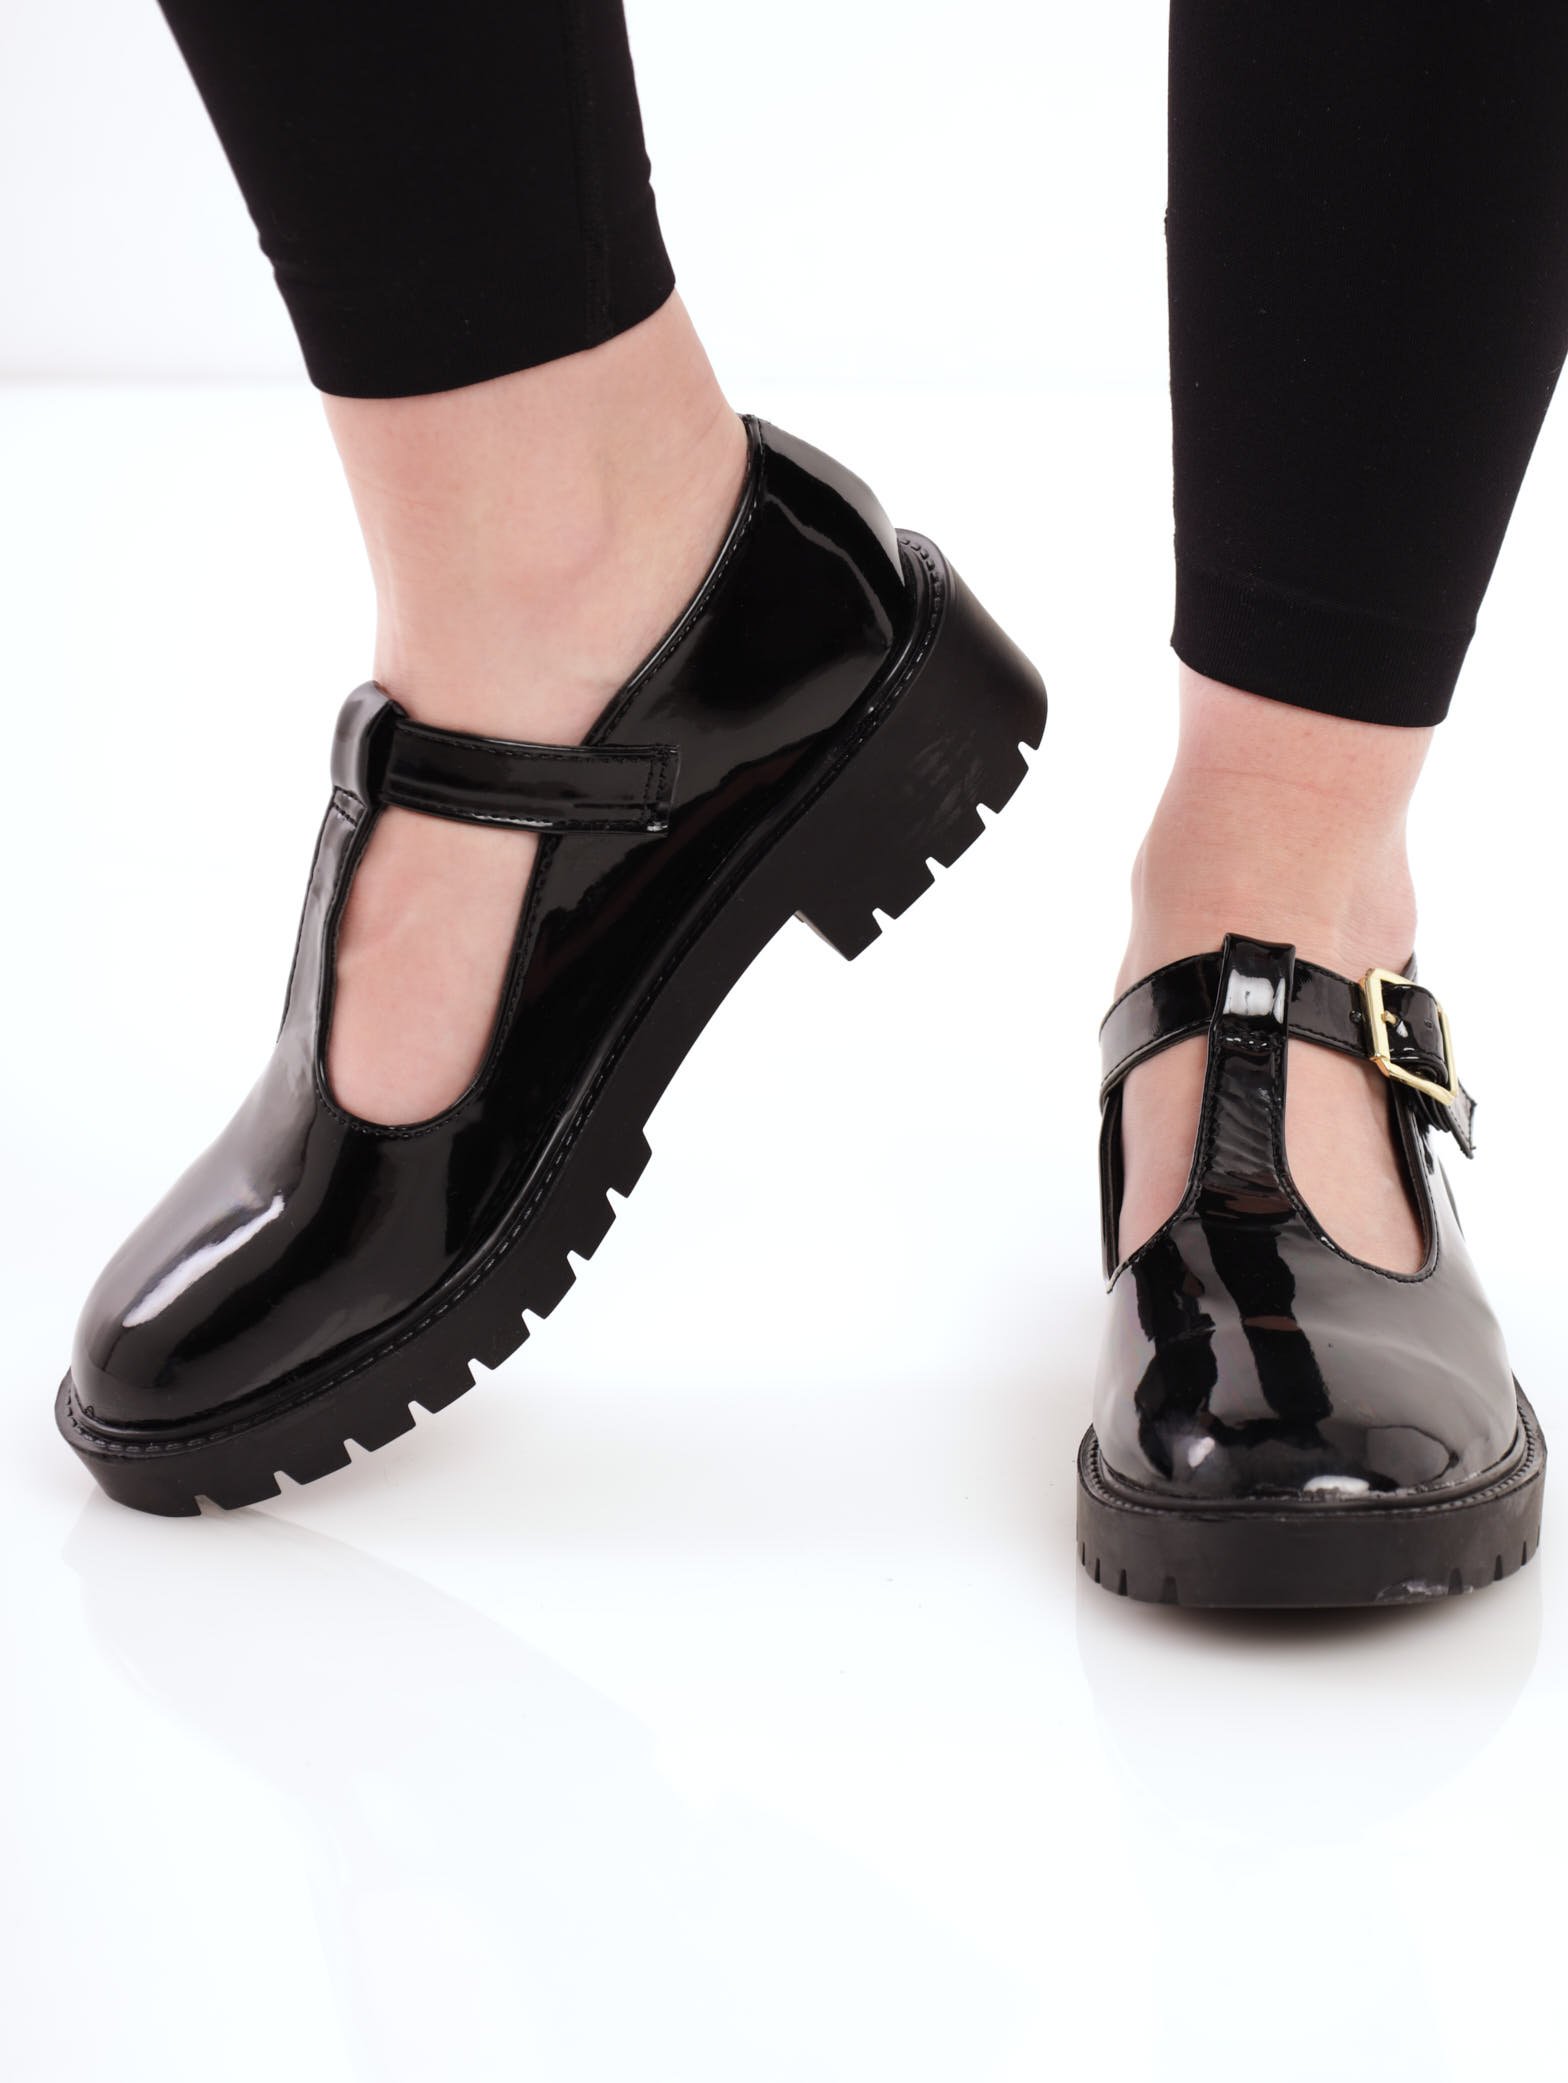 Kickers Ladies Kick Lo Aztec T-Bar Shoes In Black Patent in Black Patent